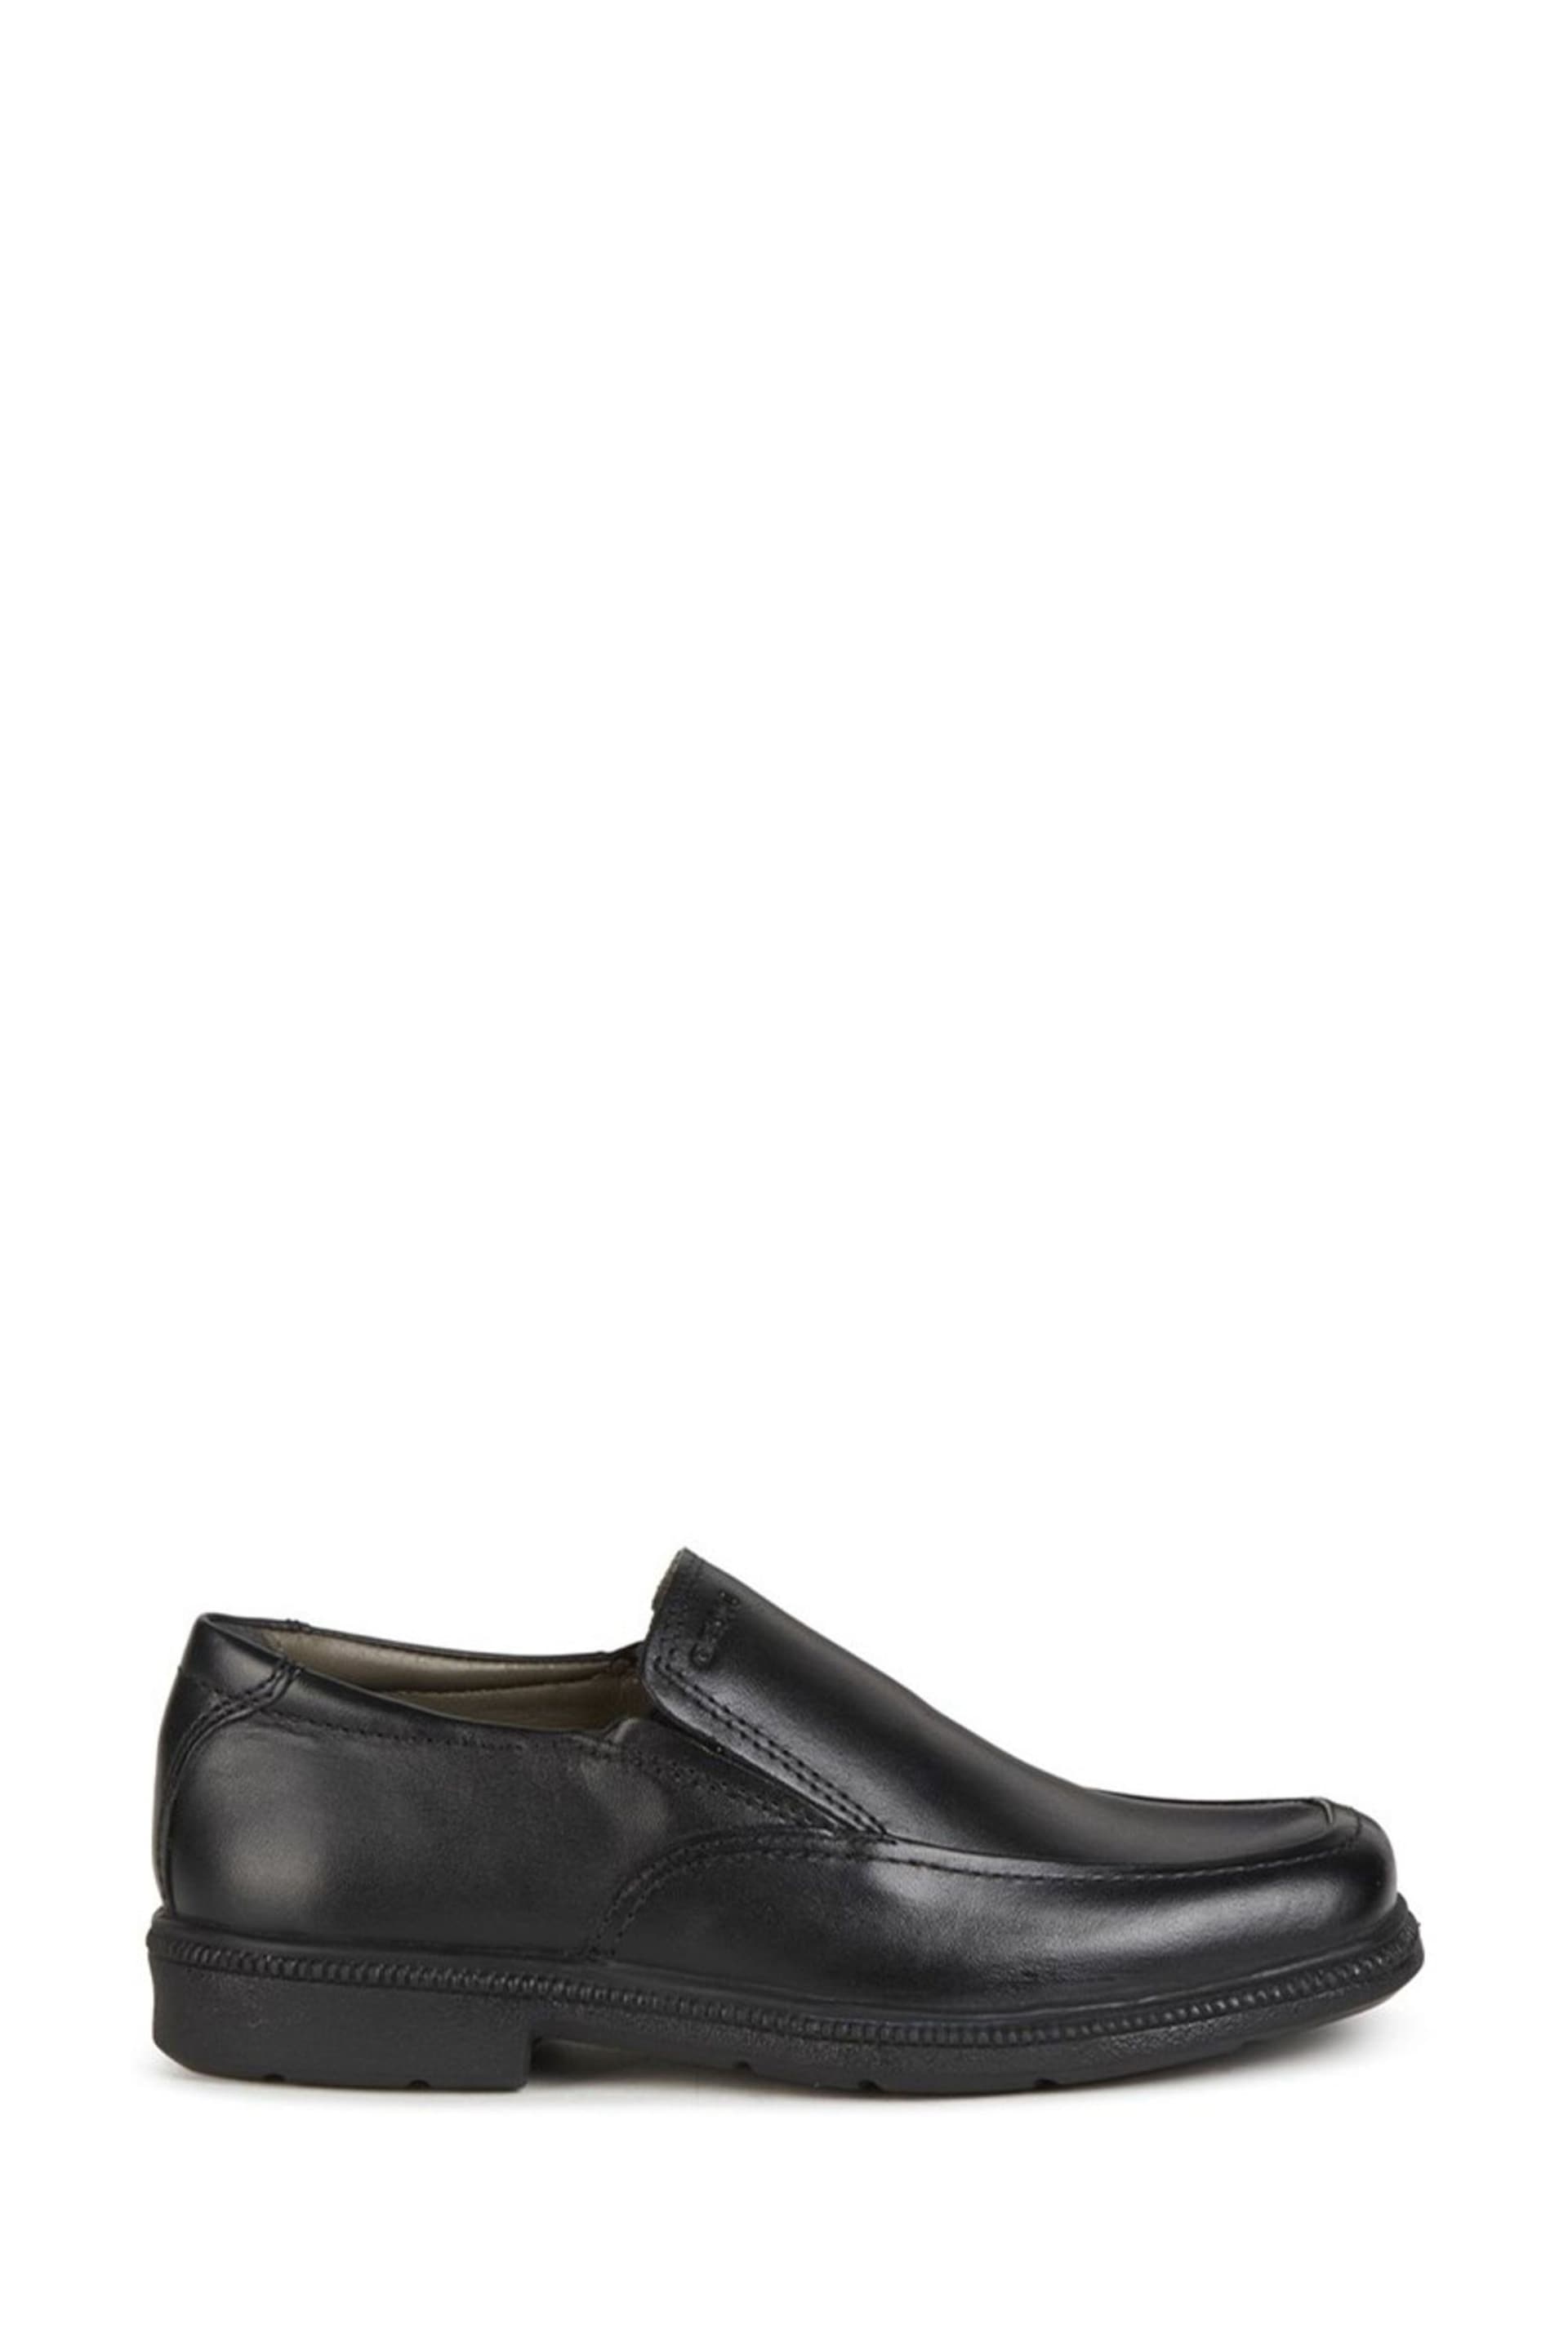 Geox Junior Boy/Unisex's Federico Black Shoes - Image 1 of 5